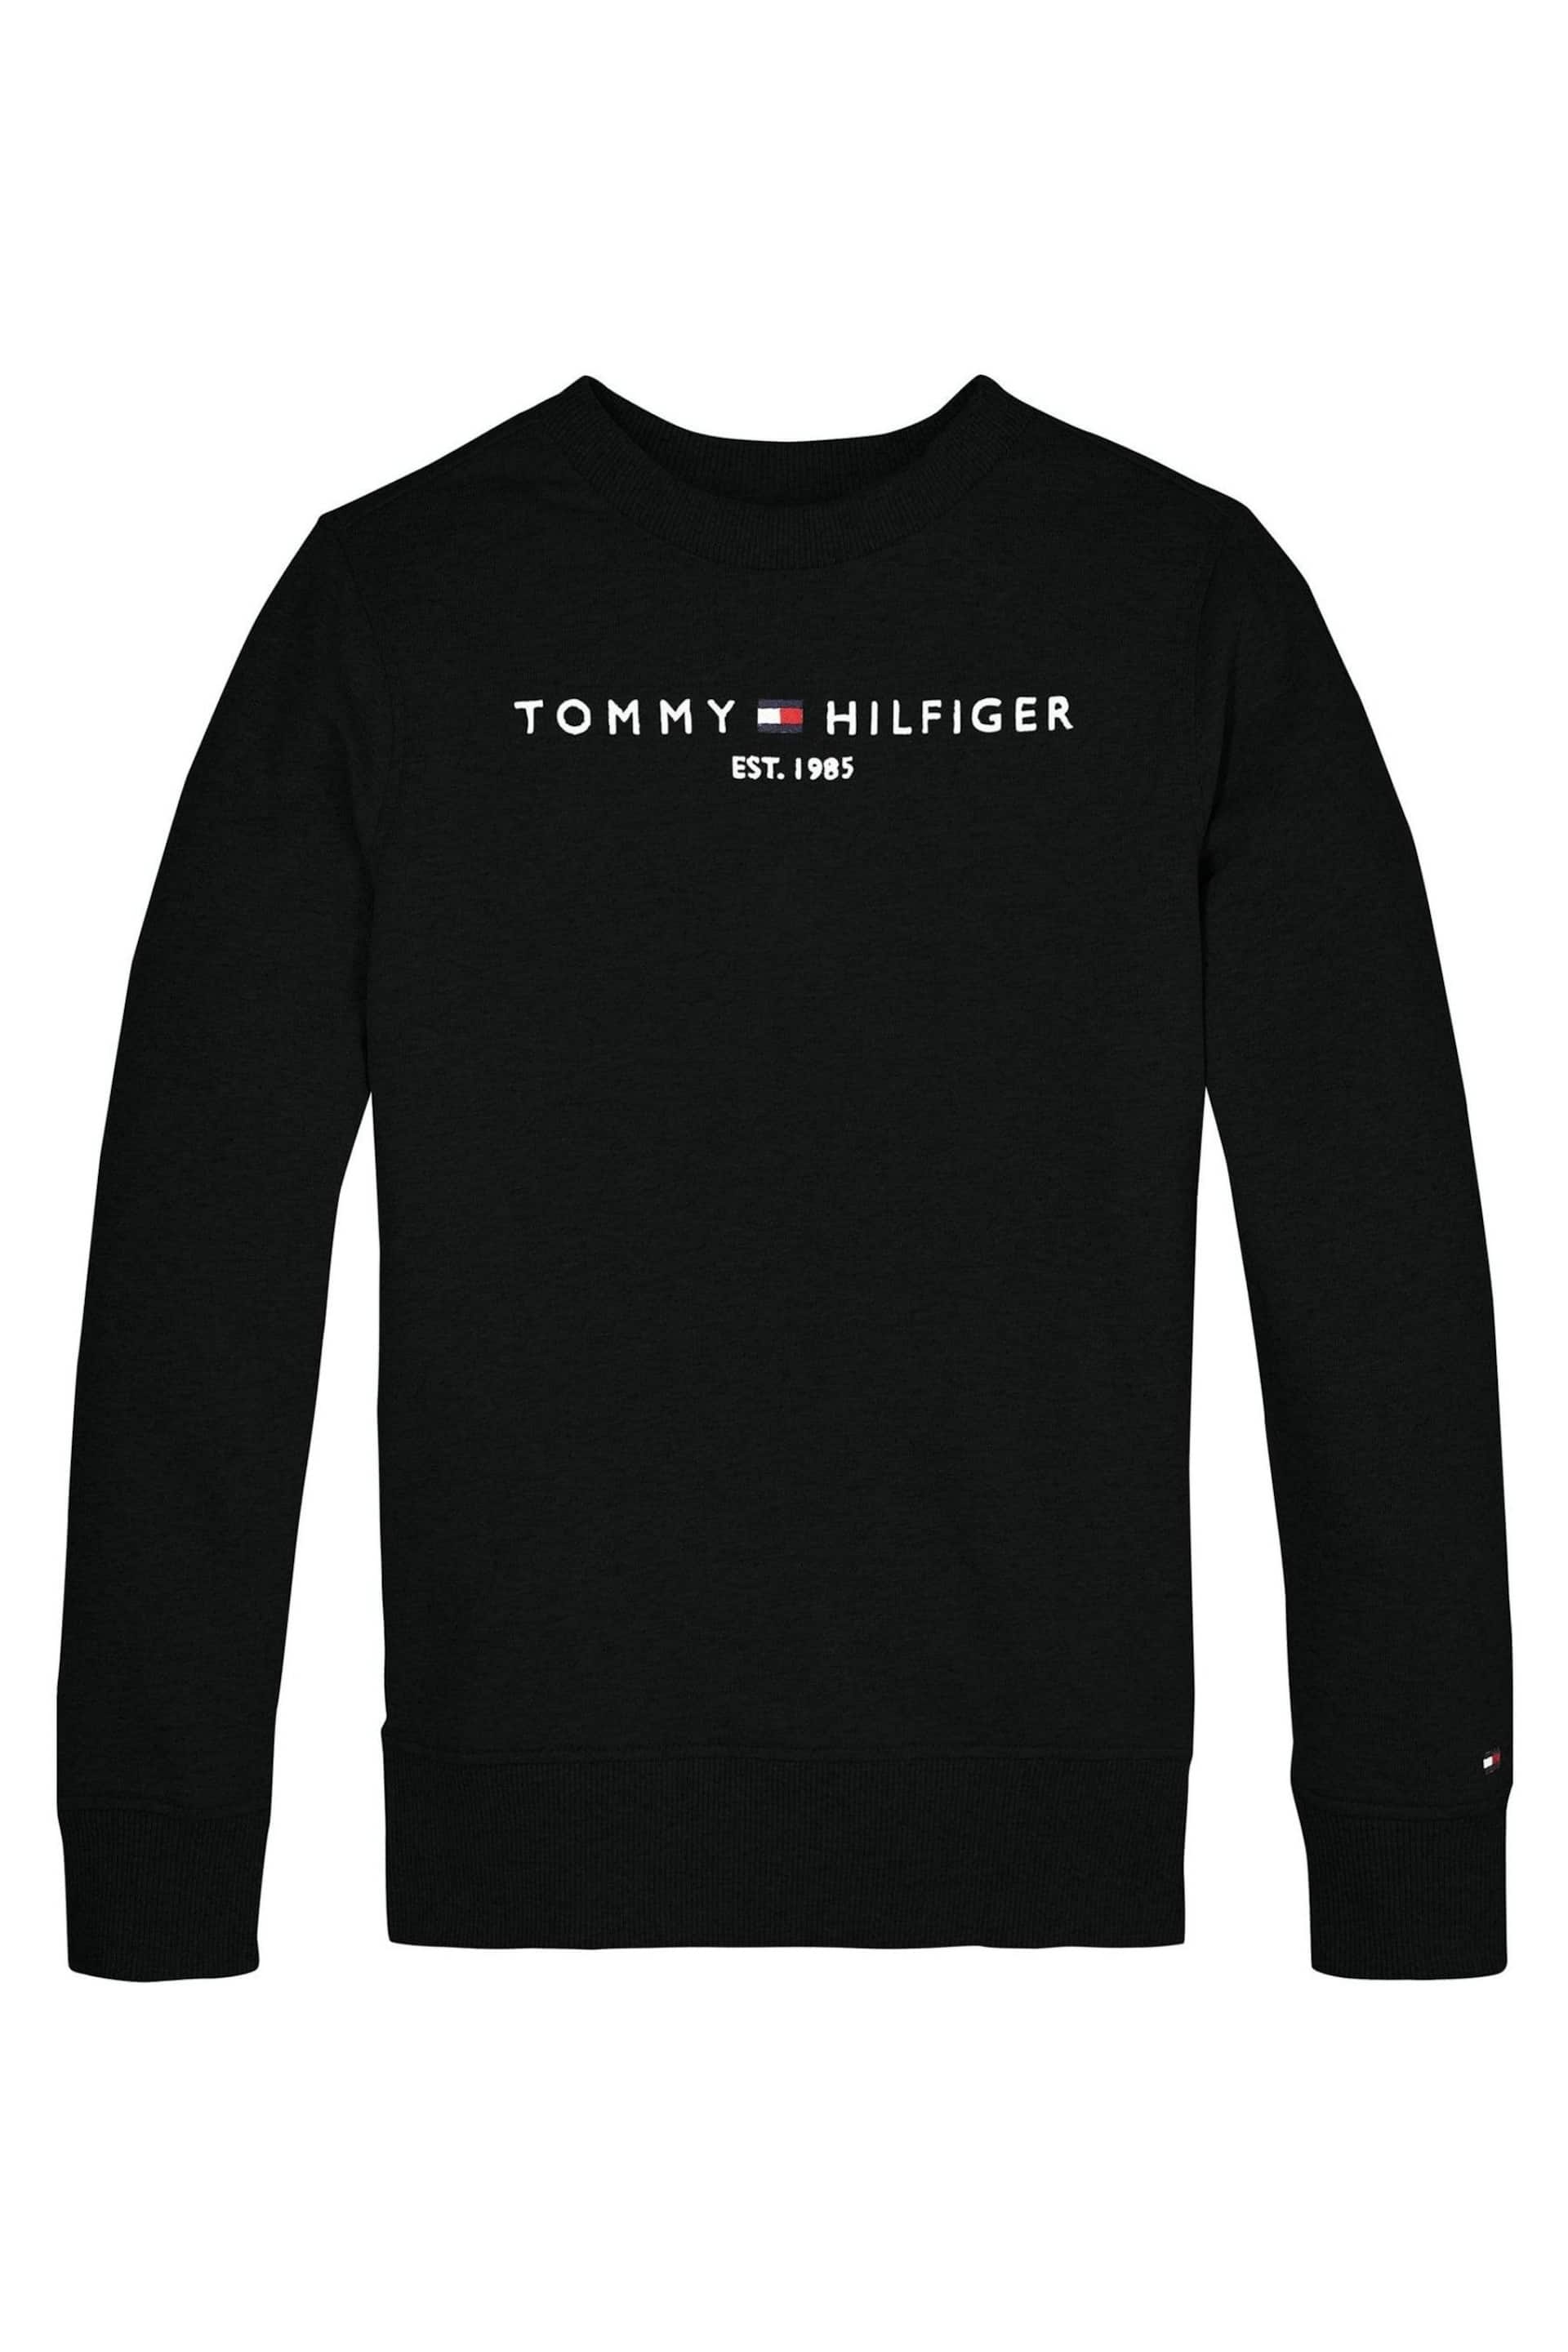 Tommy Hilfiger Black Essential Sweatshirt - Image 1 of 2